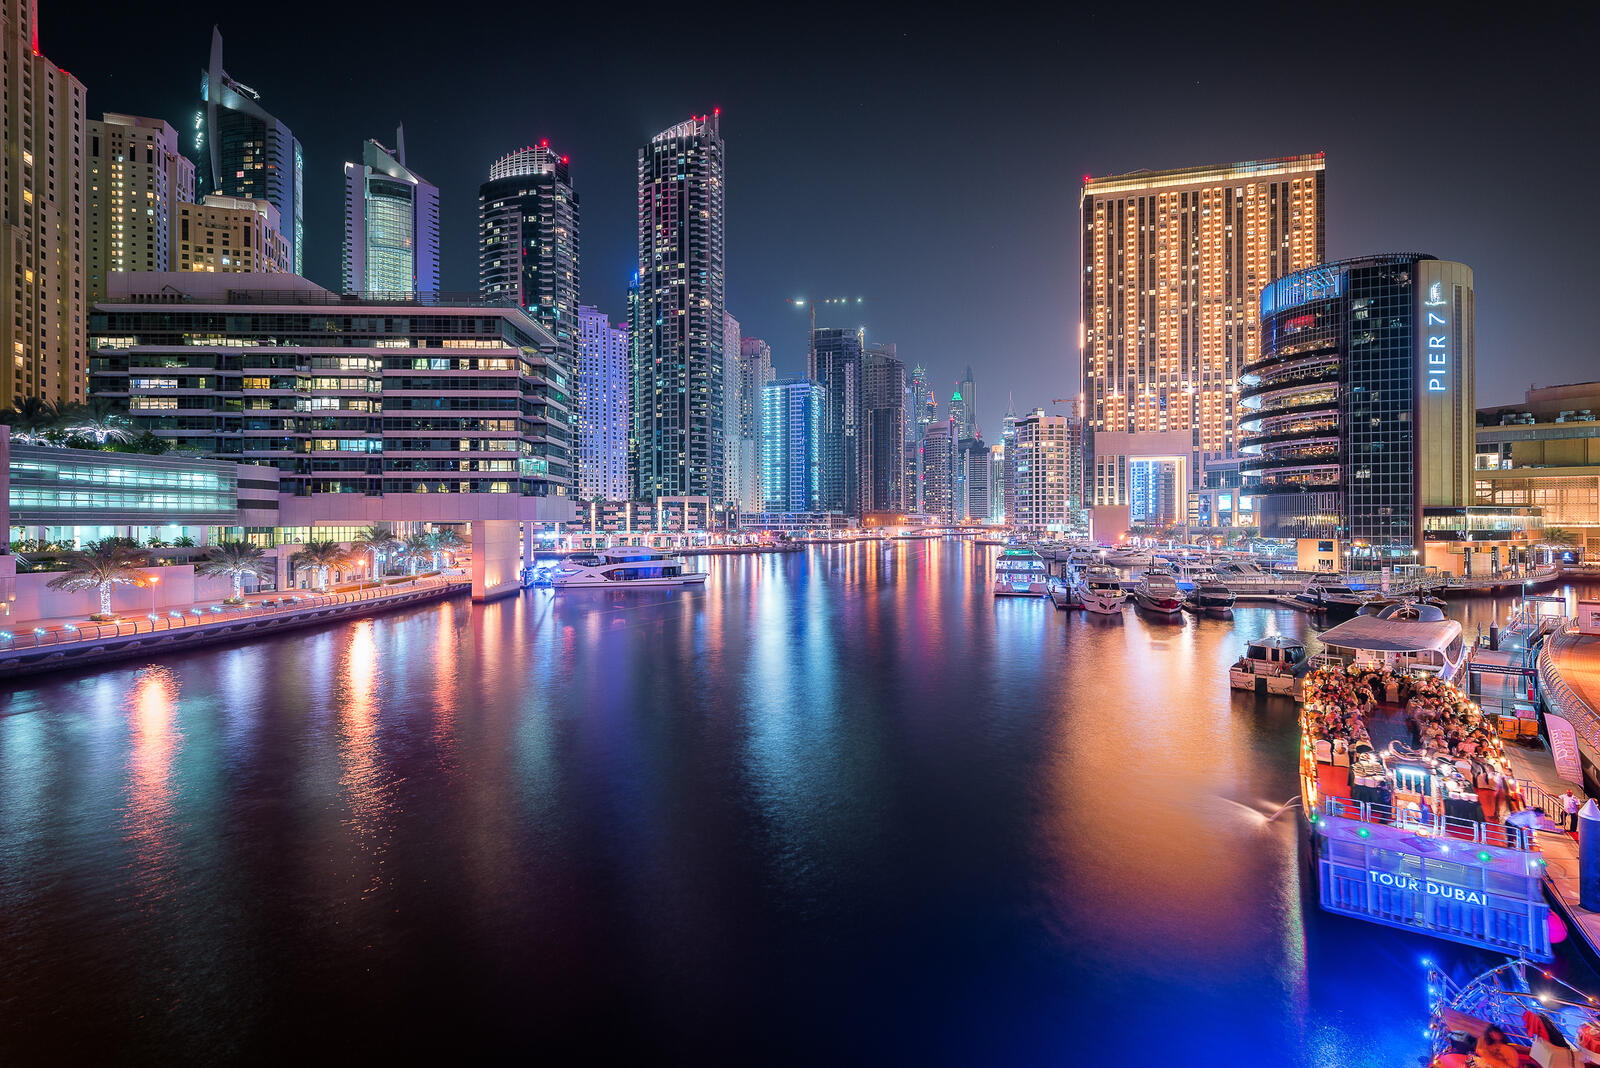 Wallpapers Night city Dubai UAE night illumination on the desktop